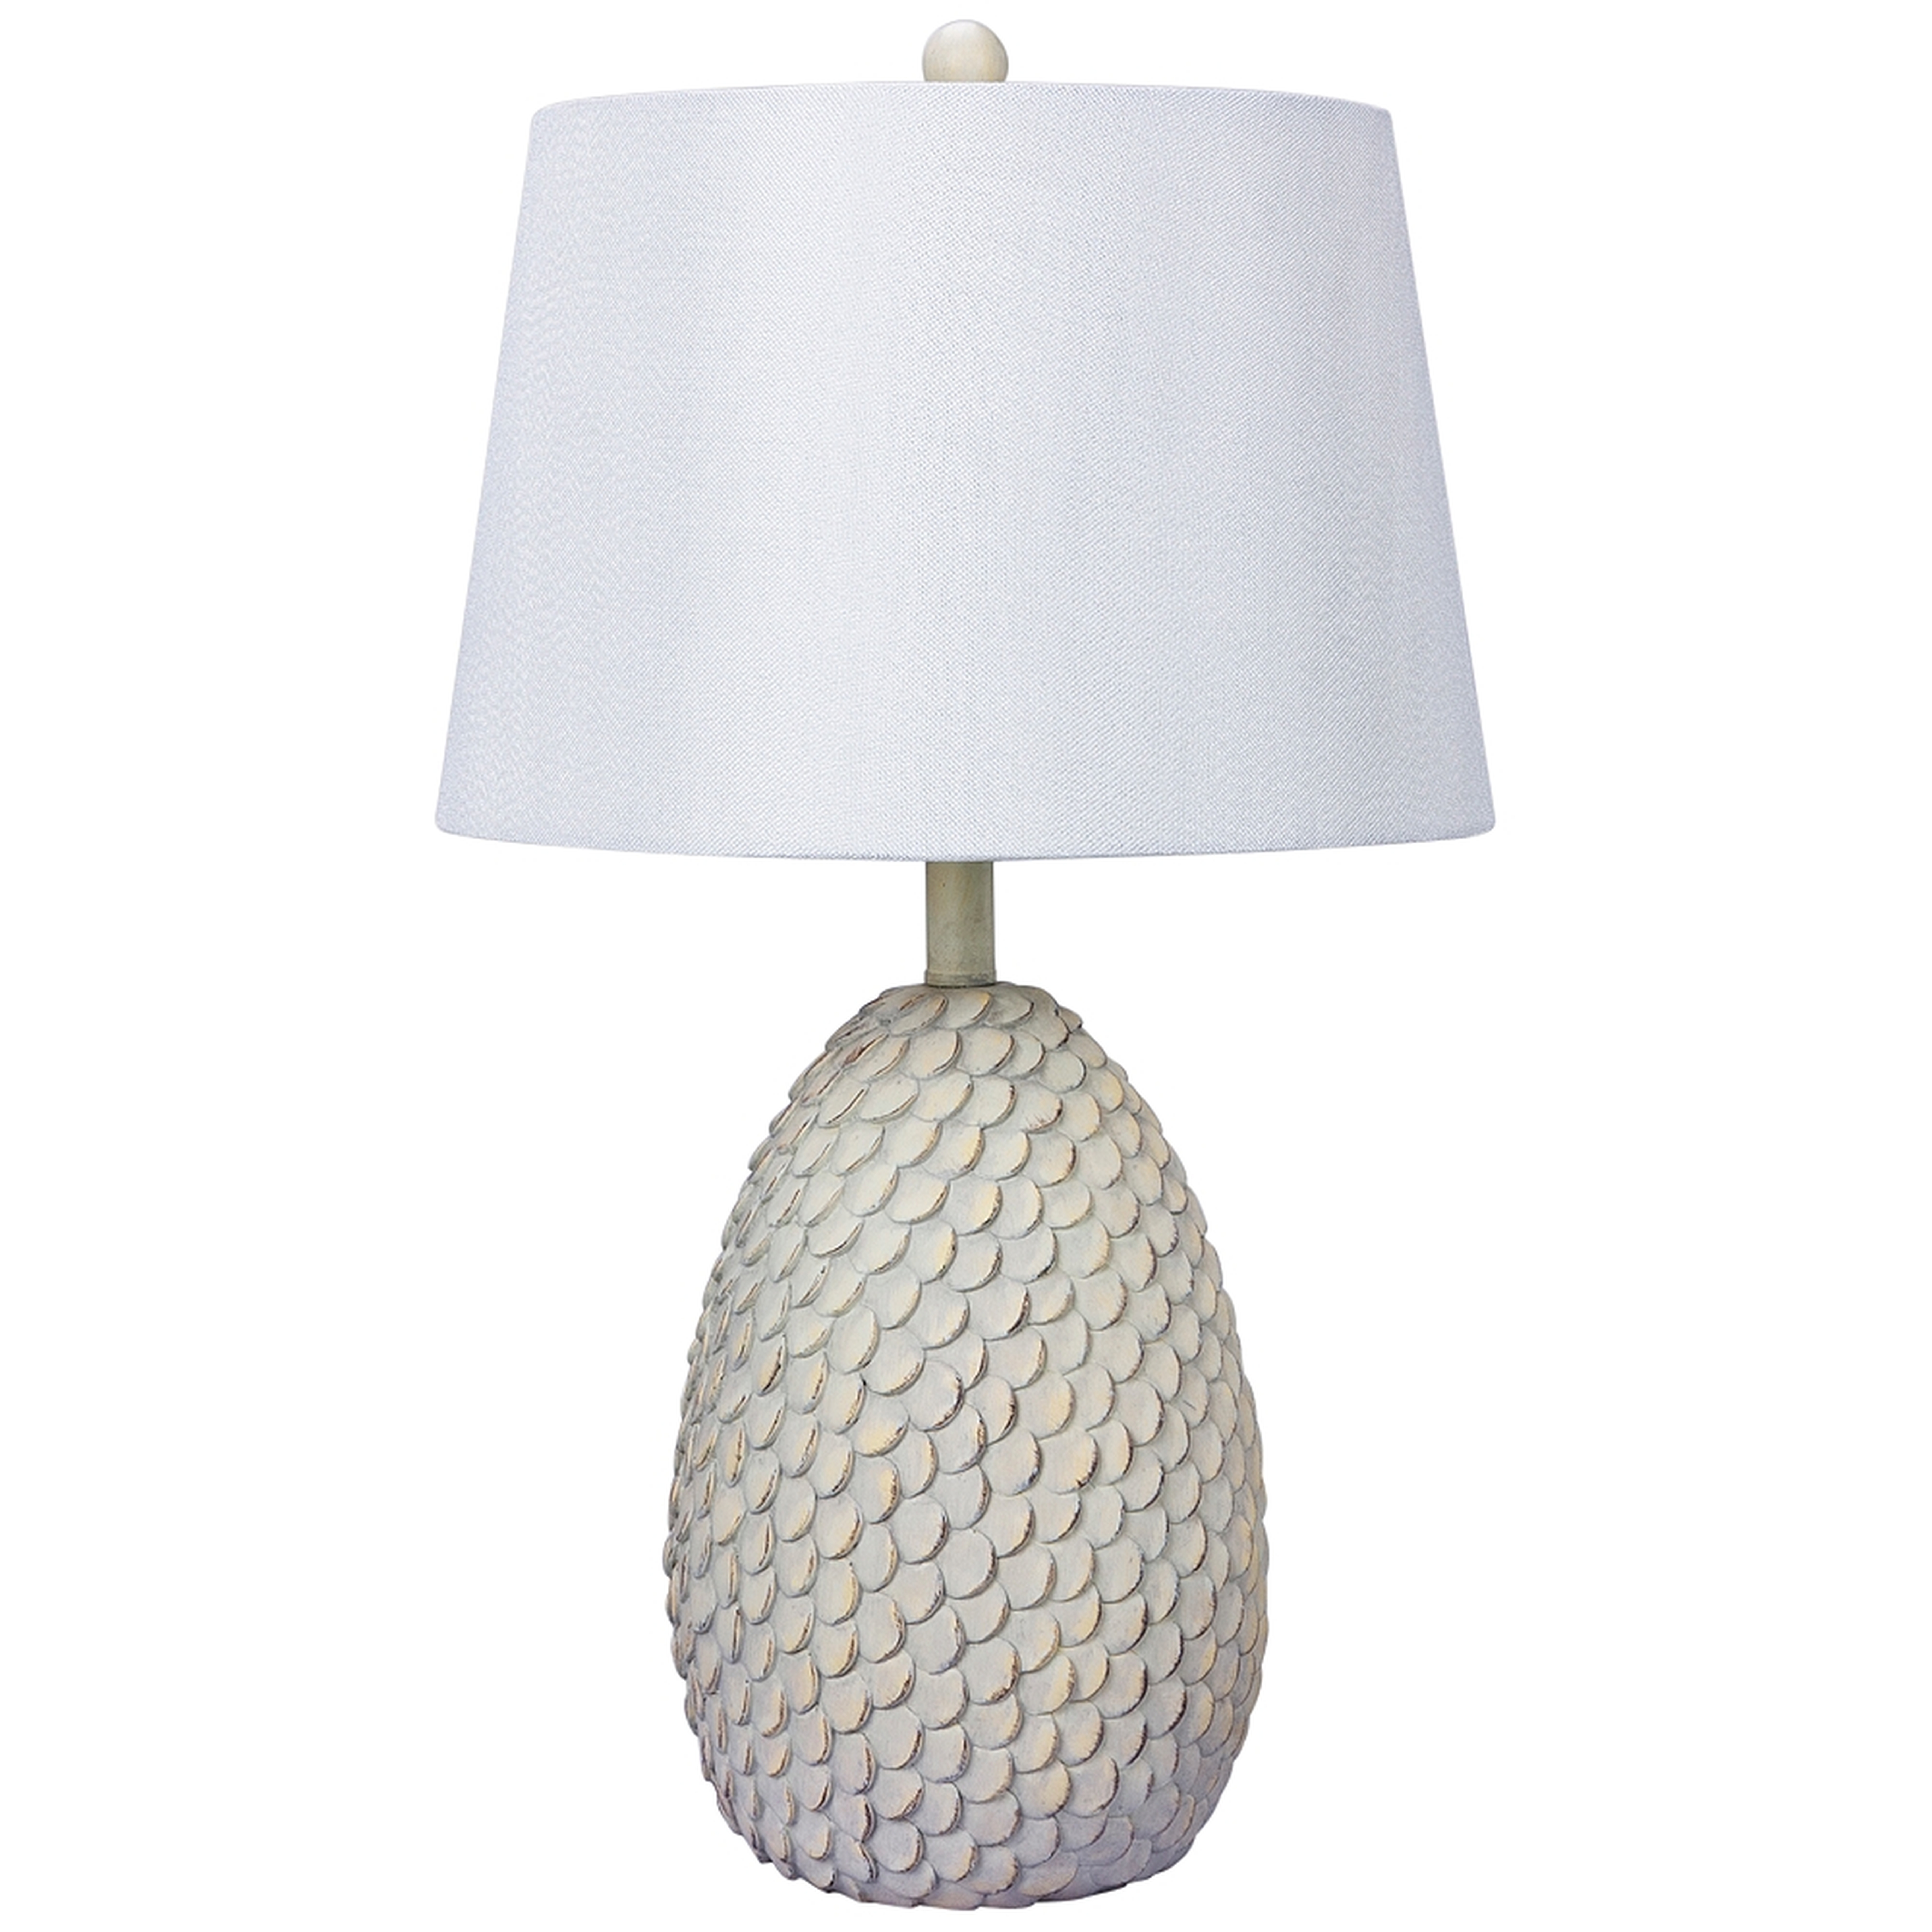 Isle Antique White Table Lamp - Style # 31M76 - Lamps Plus